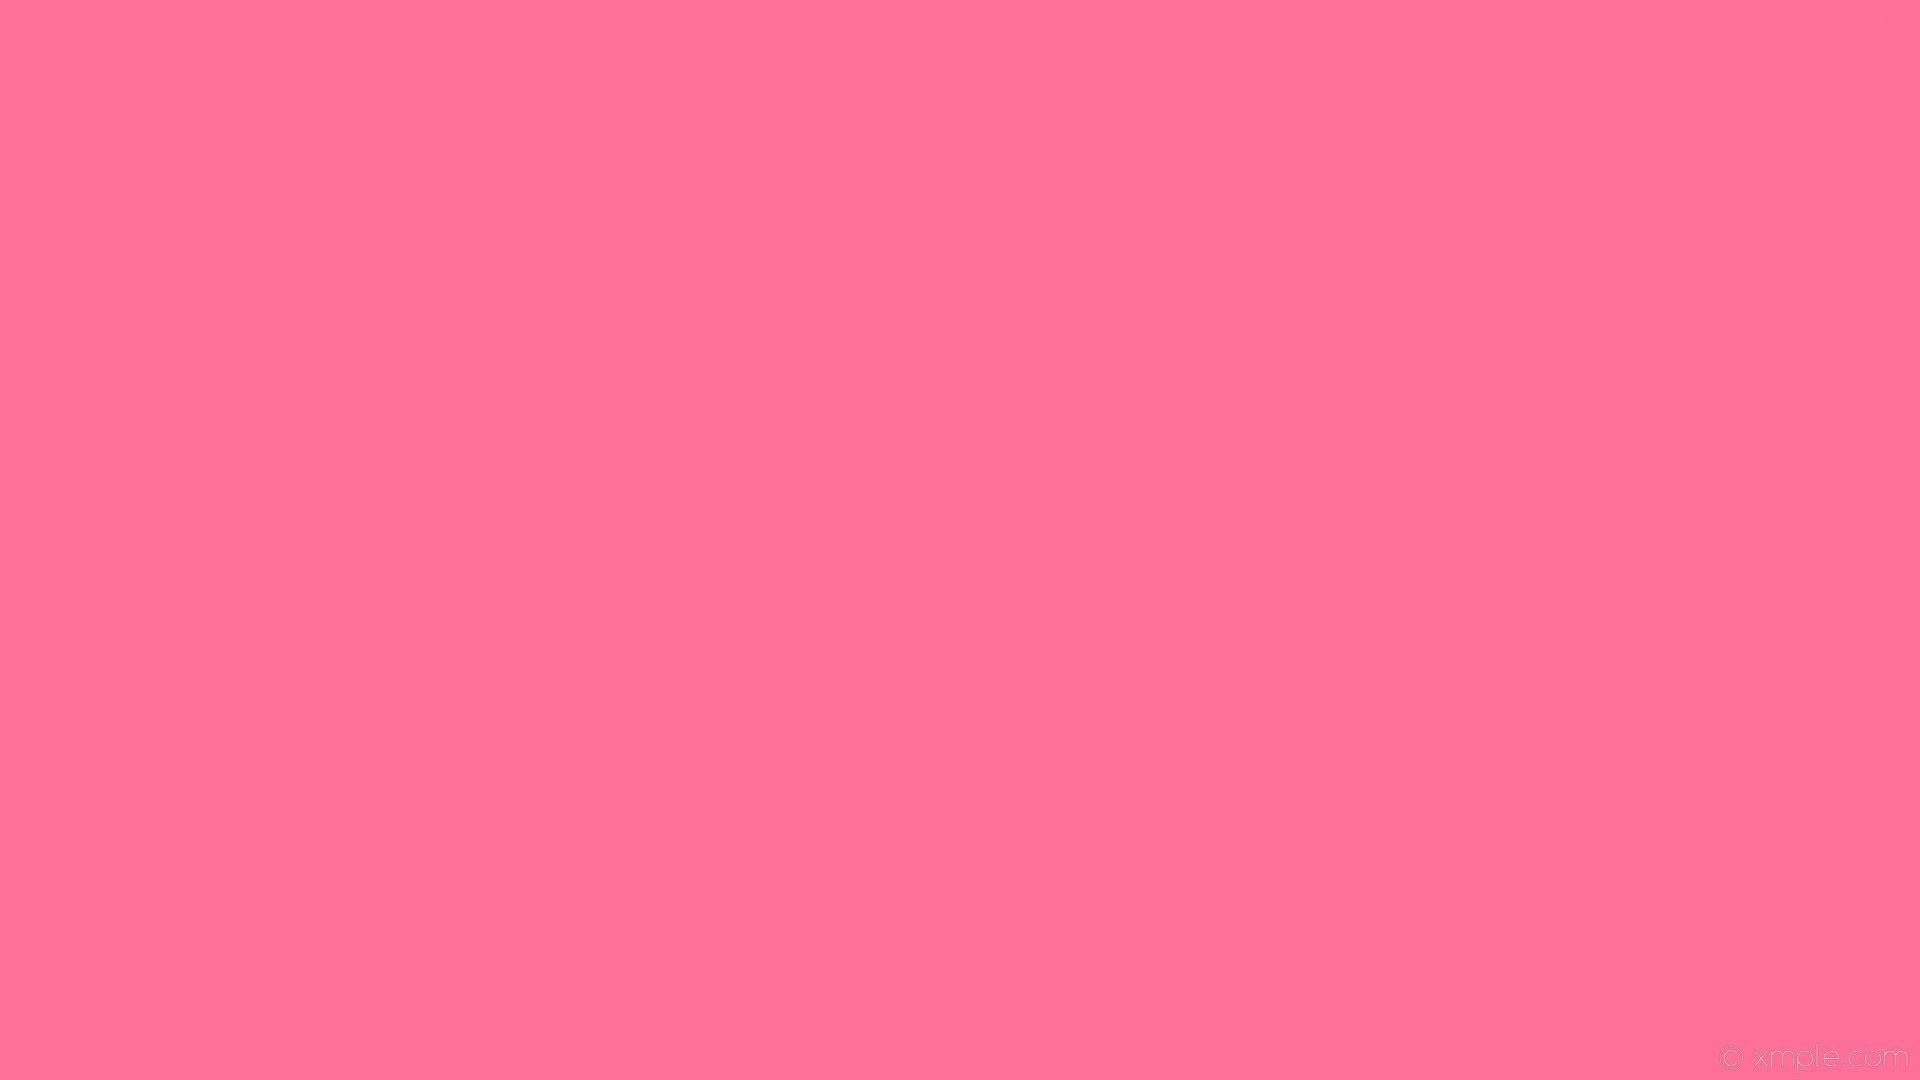 Textured Plain Pink 881564 Wallpaper - Designer Wallpaper - Gifted Parrot